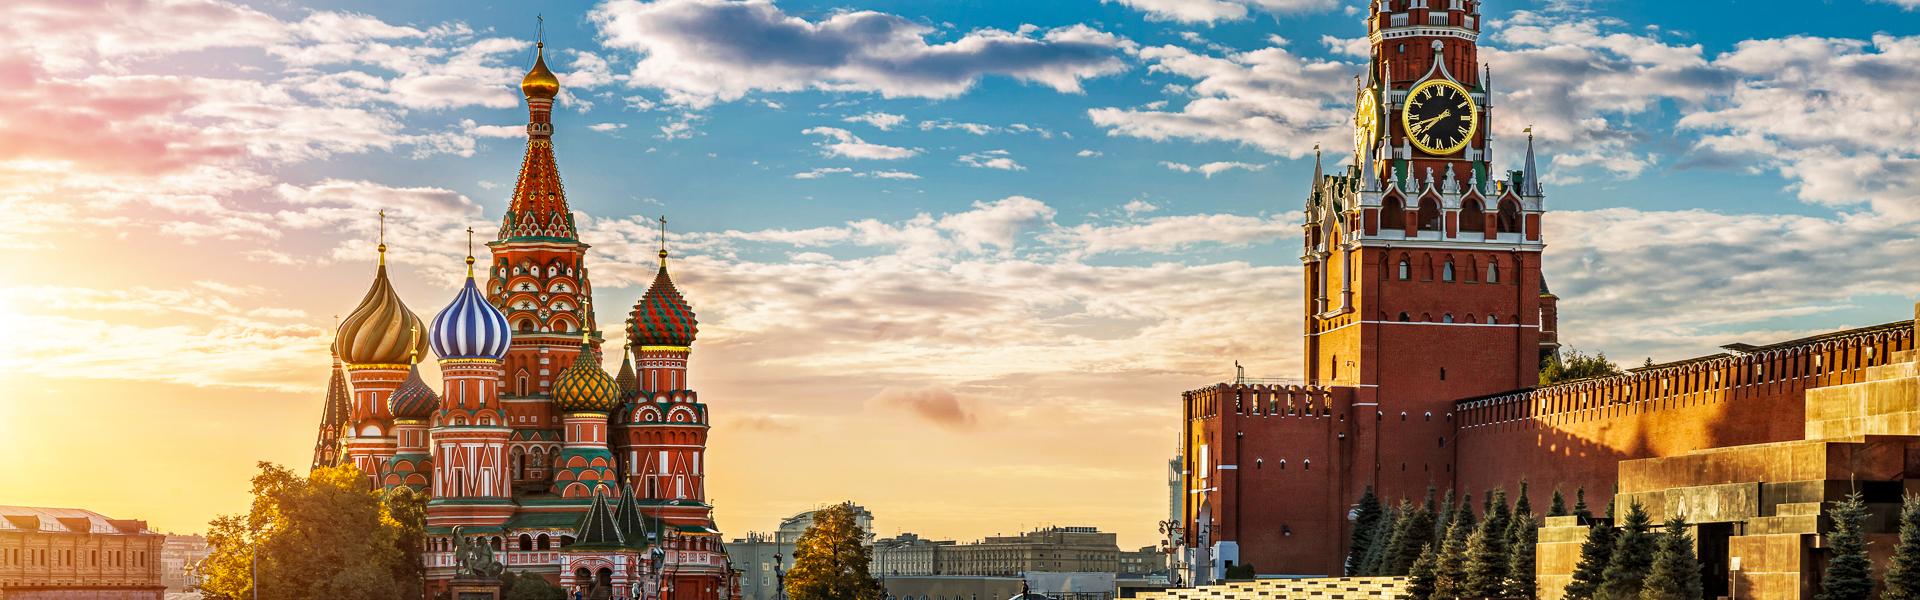 Morgensonne auf dem Roten Platz in Moskau |  Baturina Yuliya, Shutterstock / Chamleon